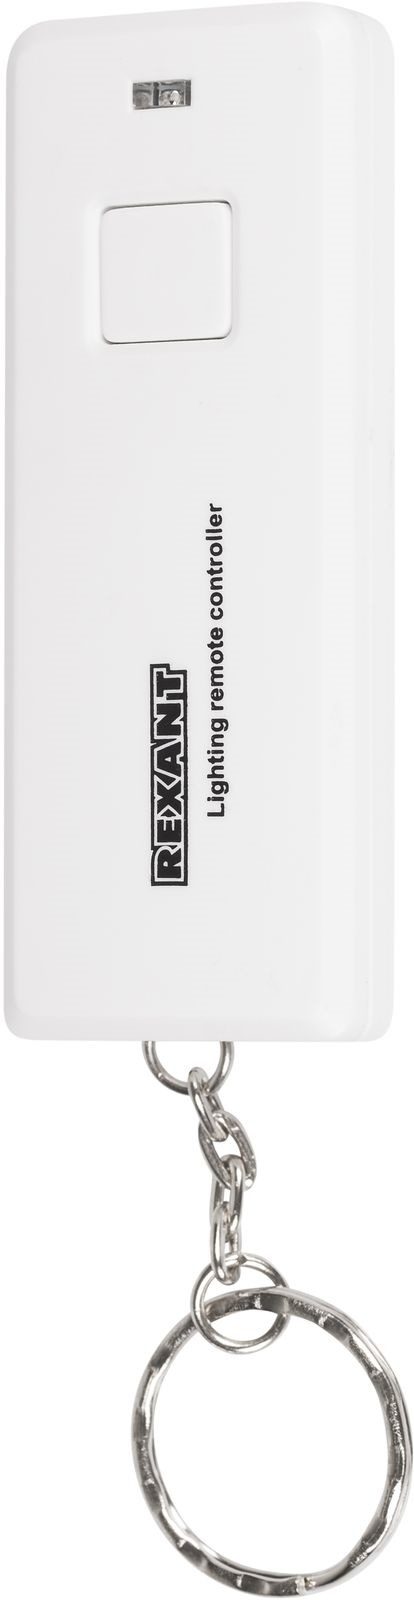 фото Цокольный патрон Rexant RX-15, для лампочки Е27 + Пульт ДУ, 10-6016, белый